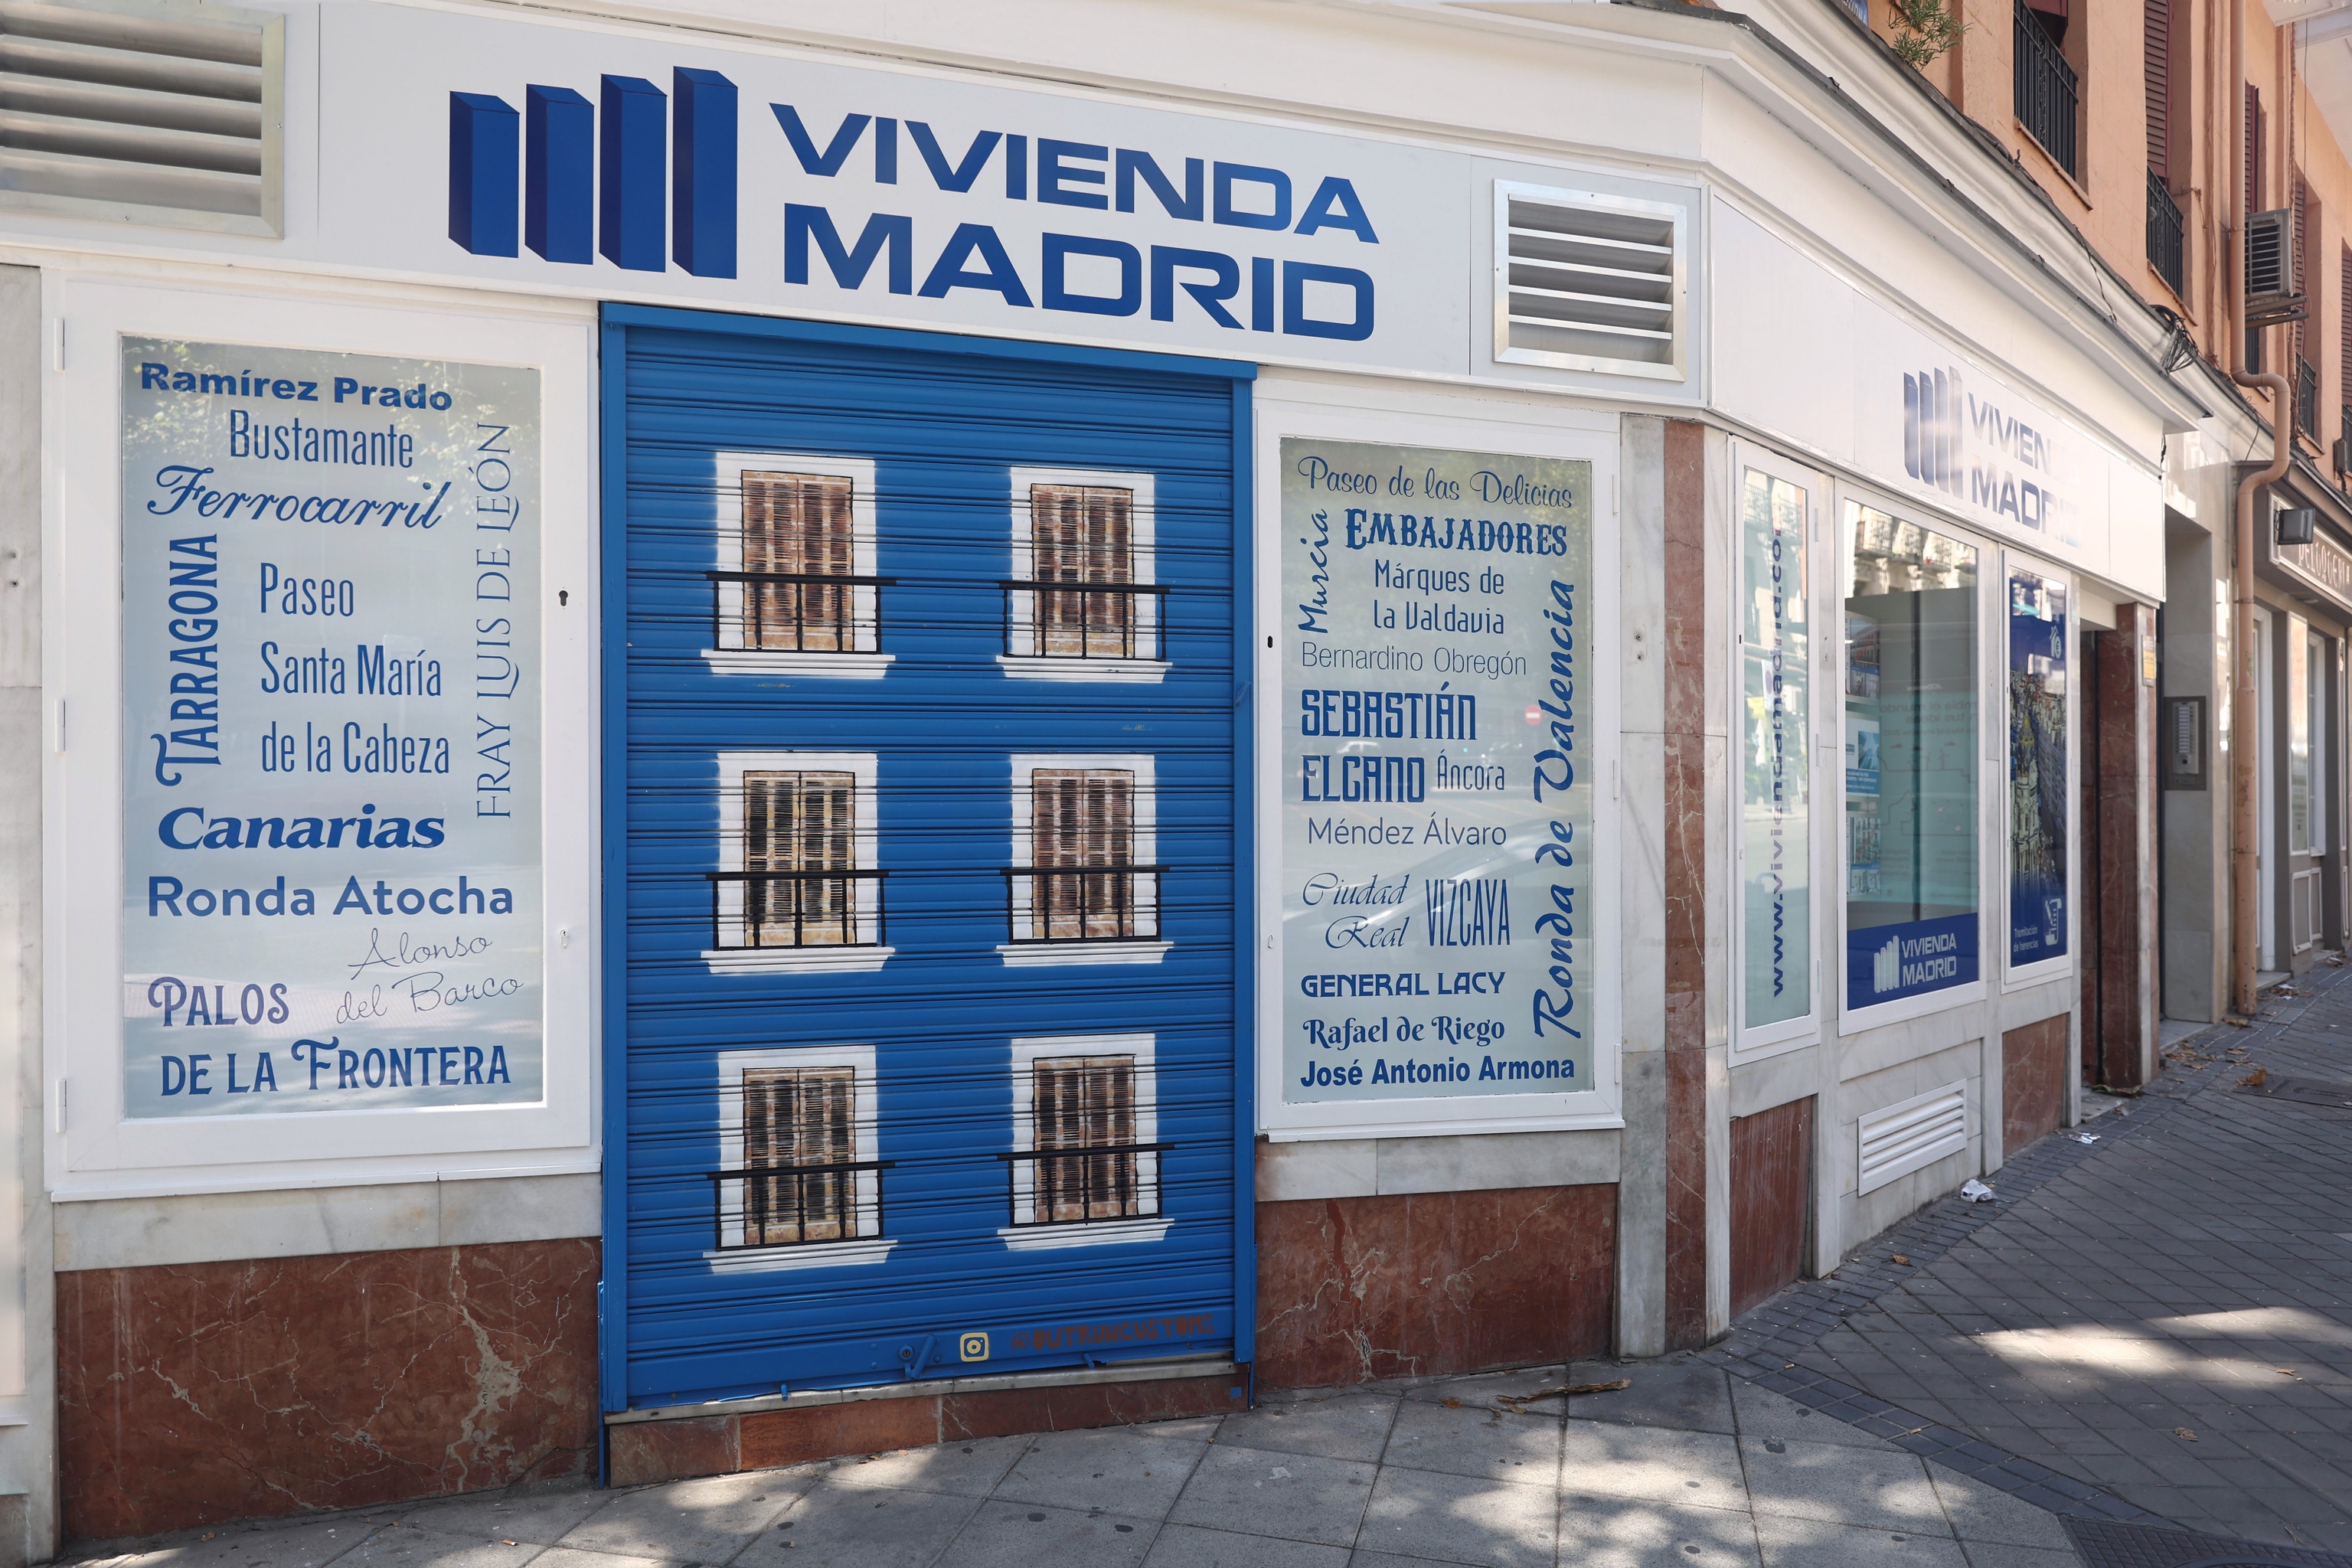 Oficina de vivienda en Madrid.